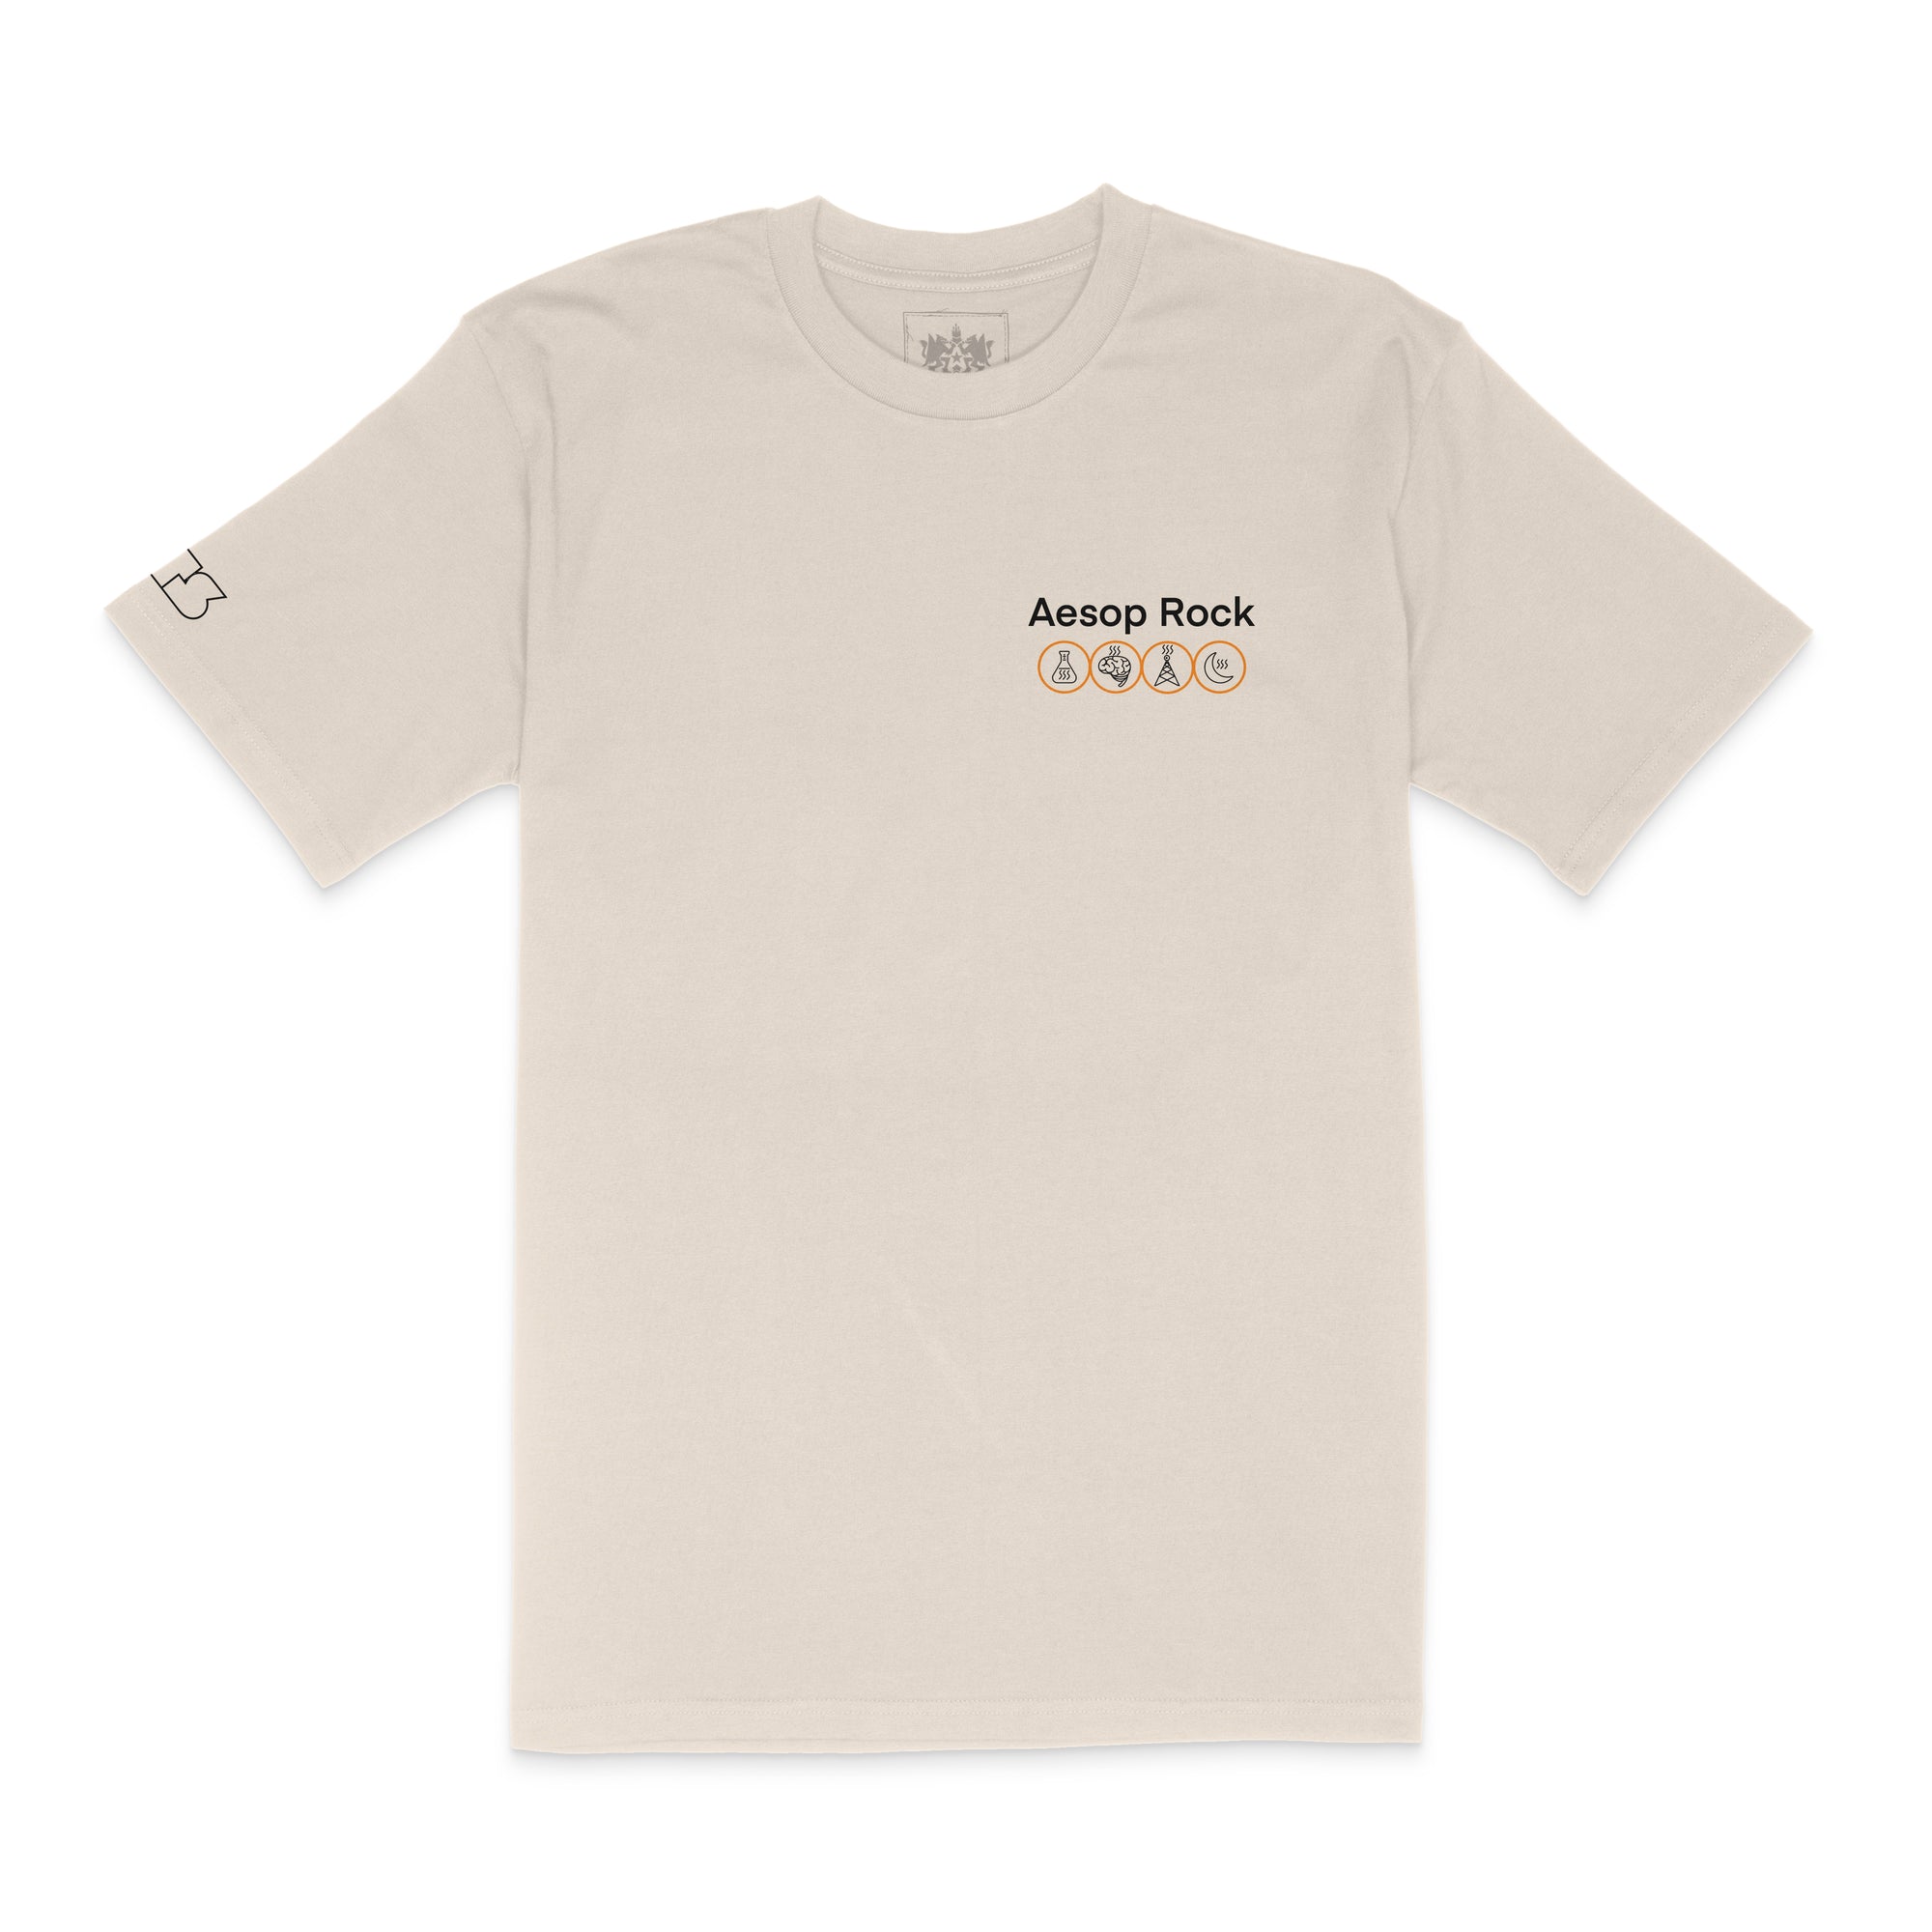 Aesop Rock - ITS Pioneers Shirt (Ecru)